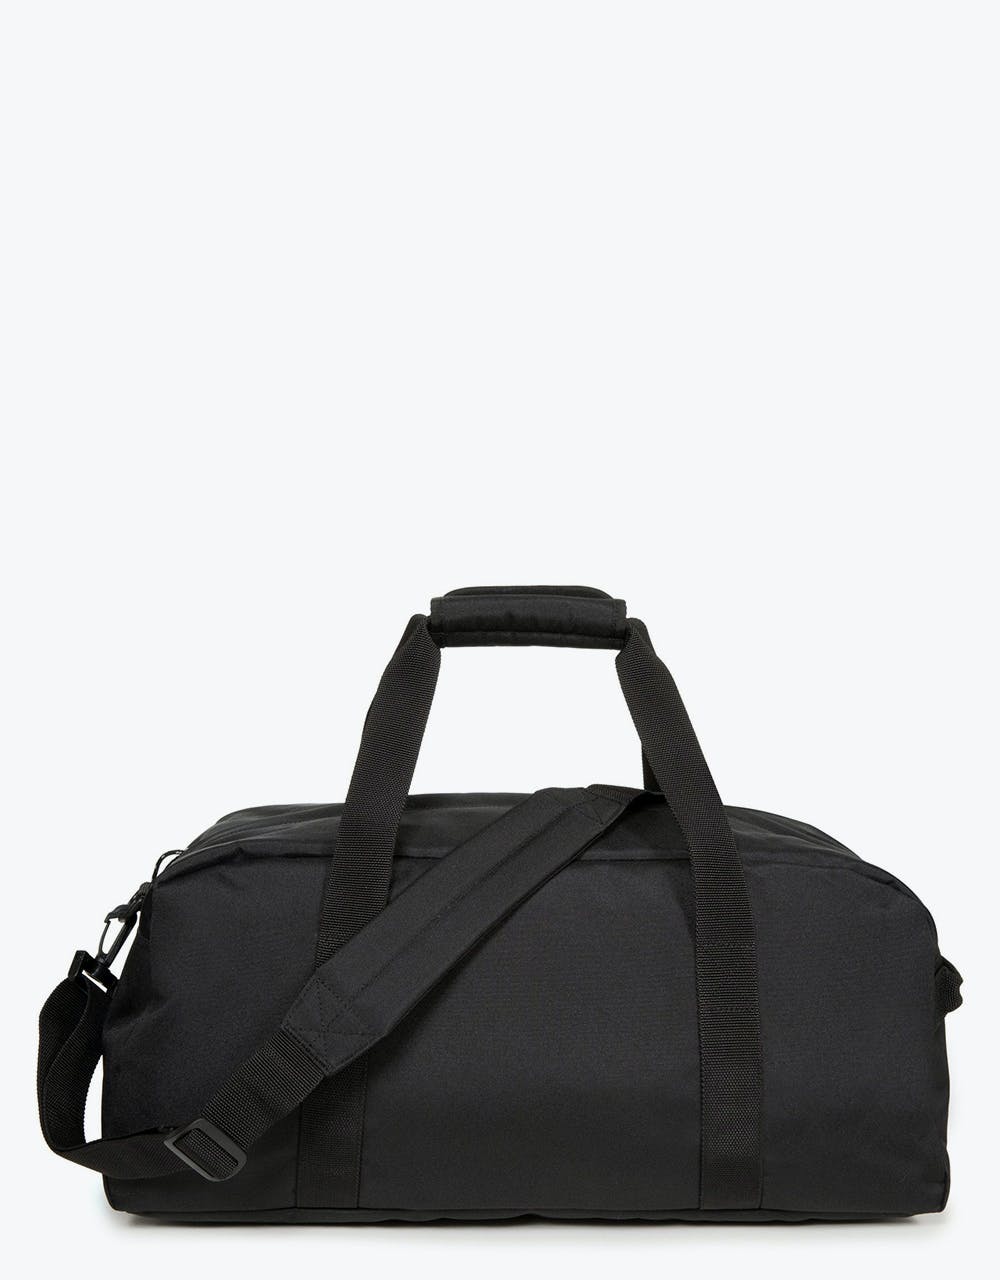 Eastpak Stand+ Duffel Bag - Reflective Black